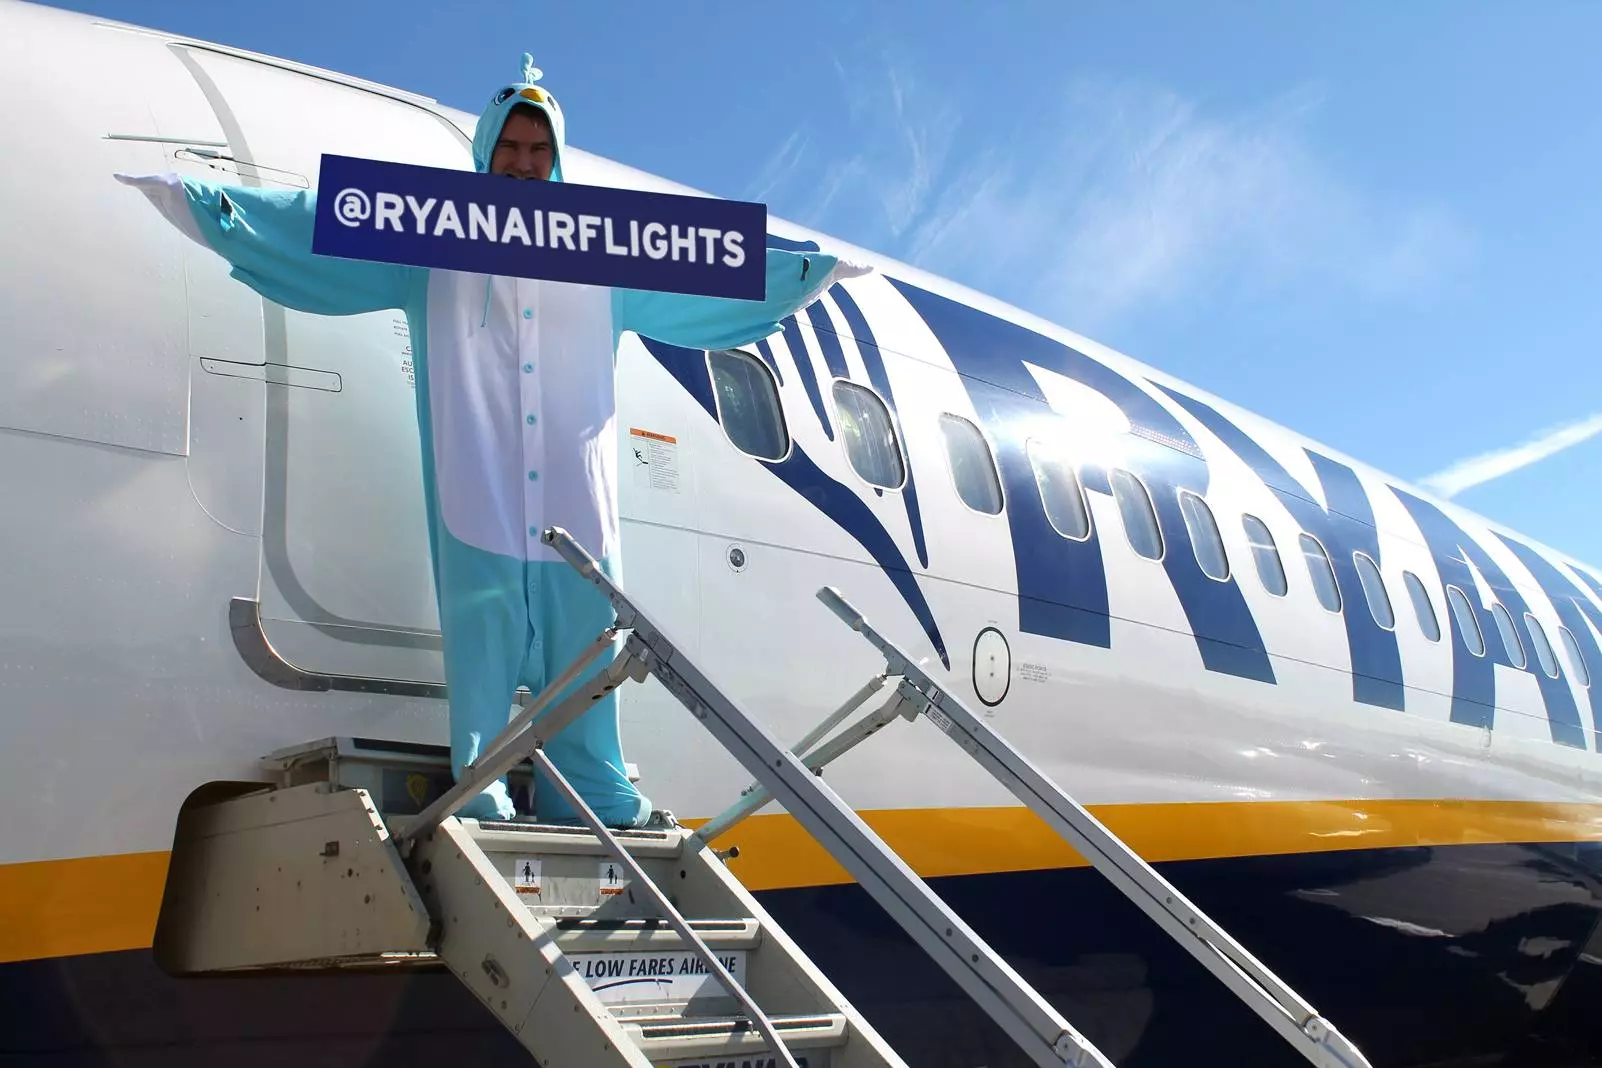 Ryanair правила провоза багажа и ручной клади 2021